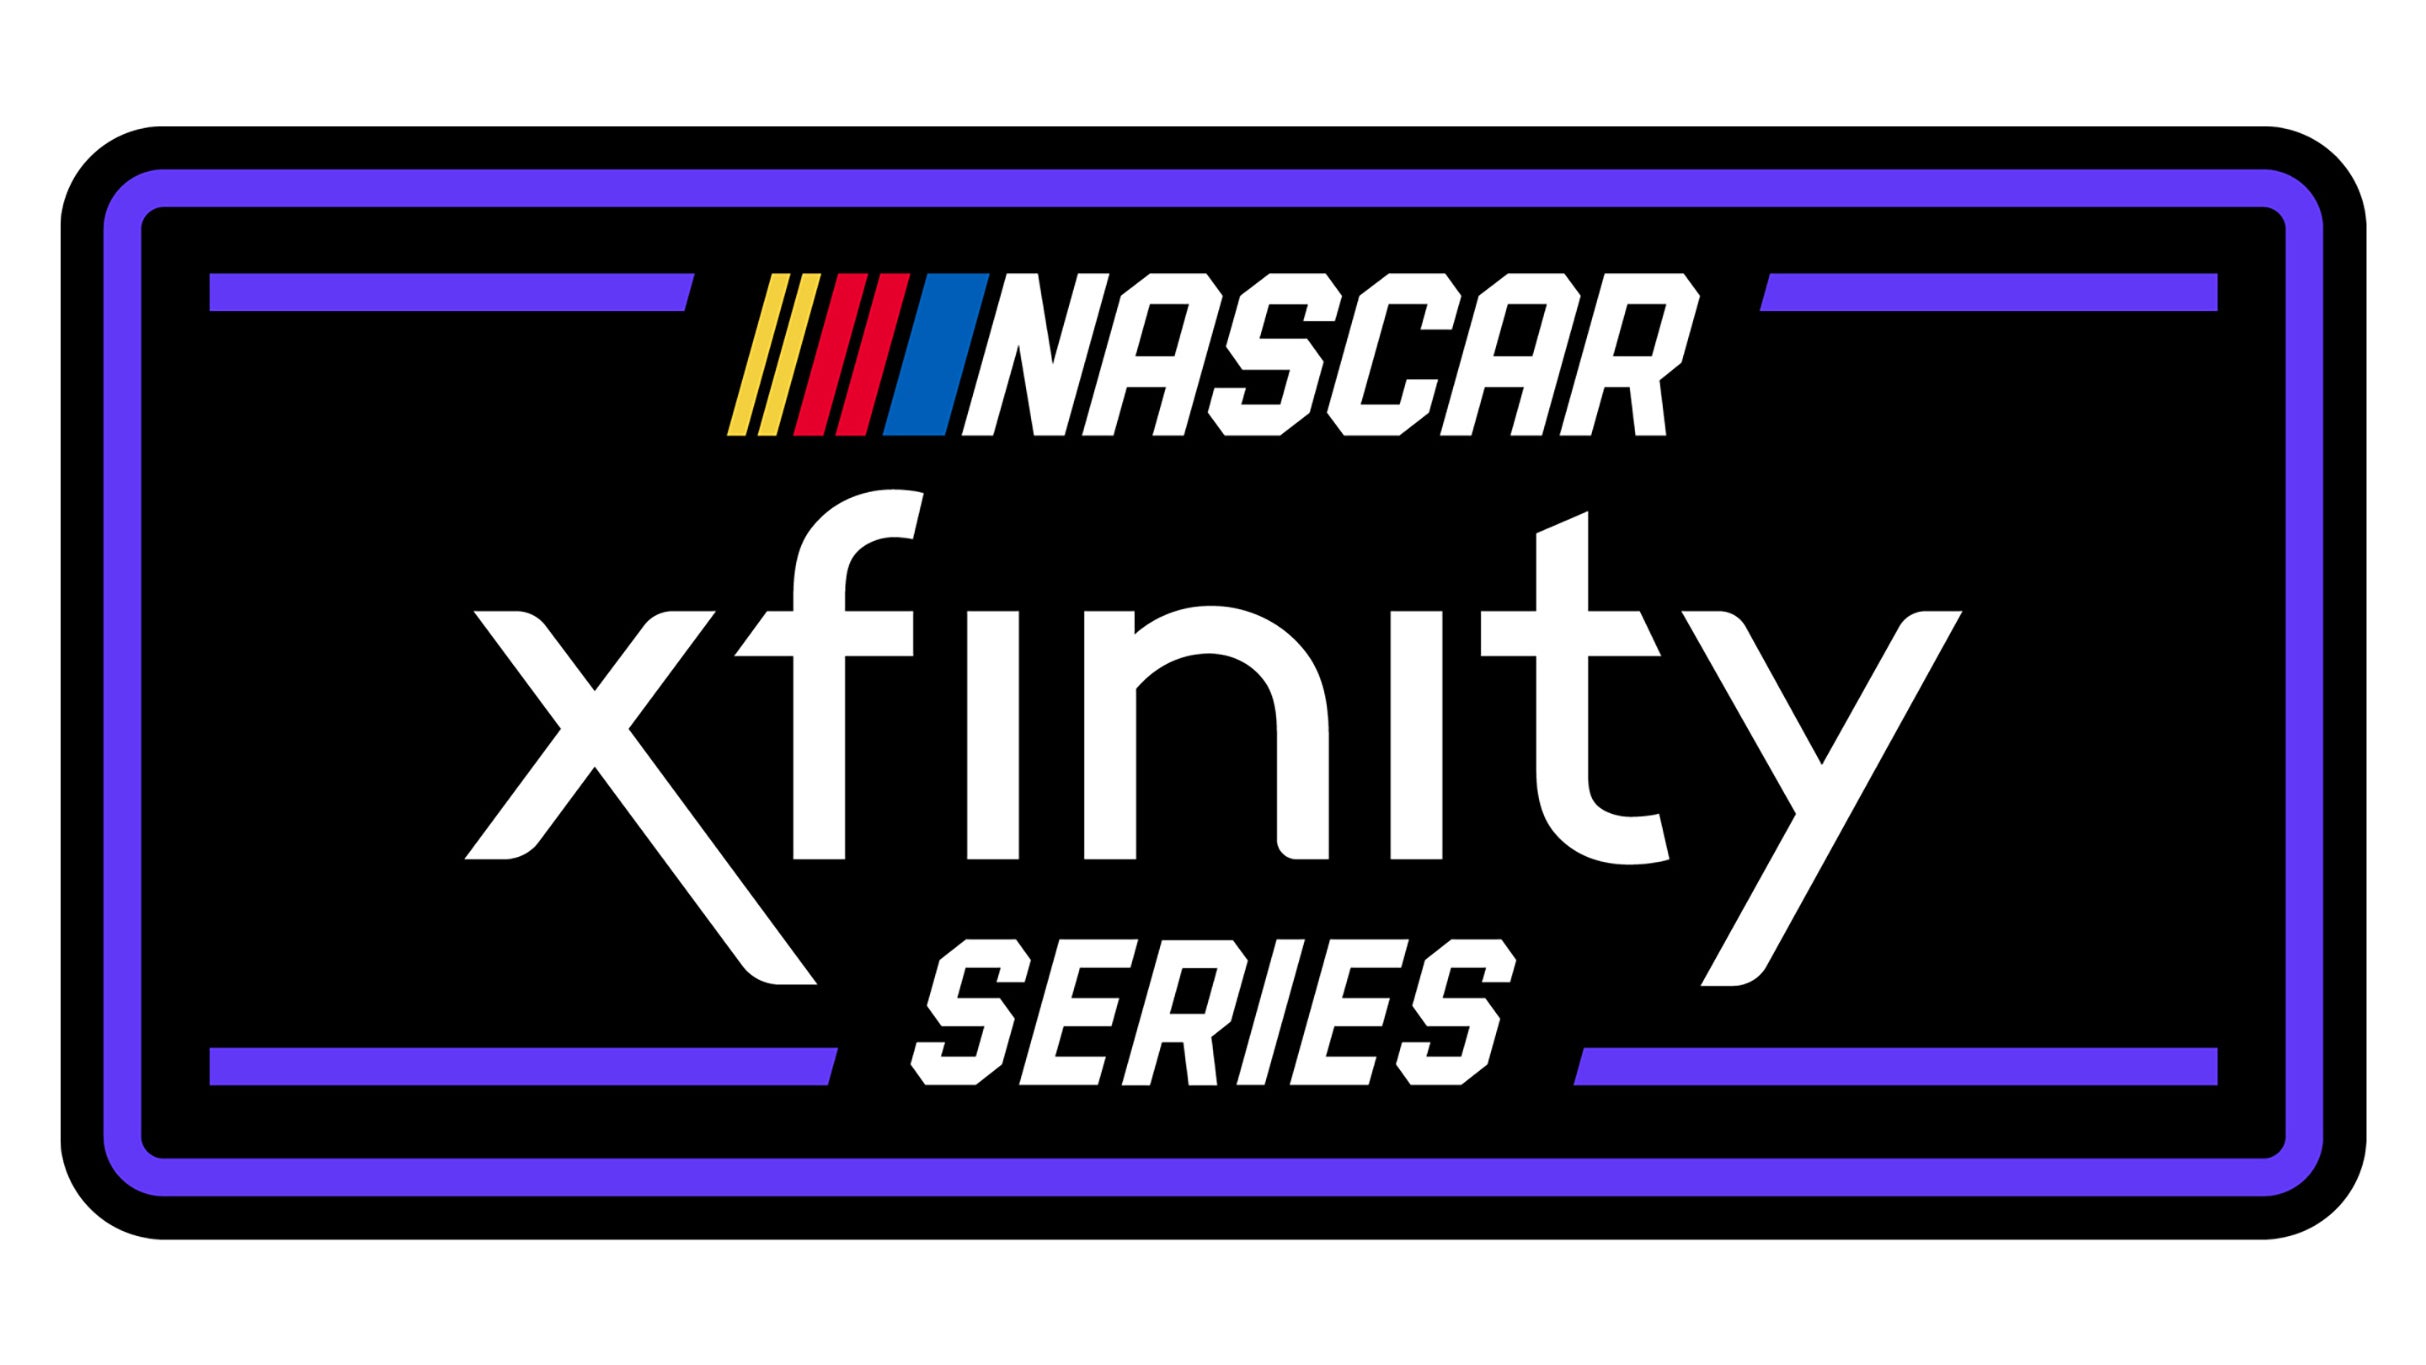 Sonoma 250 - NASCAR Xfiinity Series at Sonoma Raceway